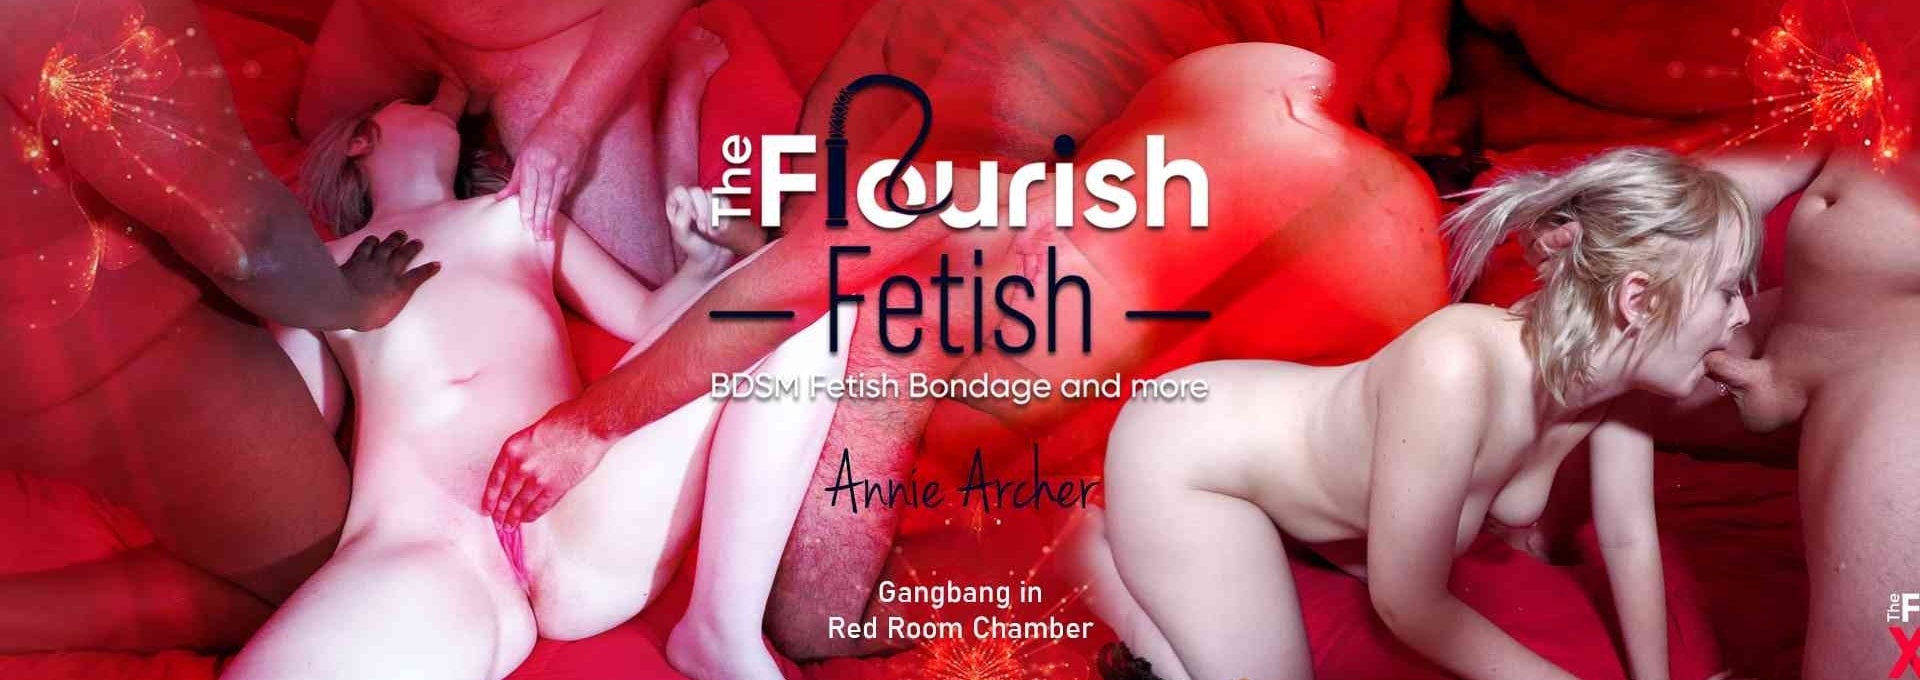 Gangbang Annie Archer in BDSM Red Room